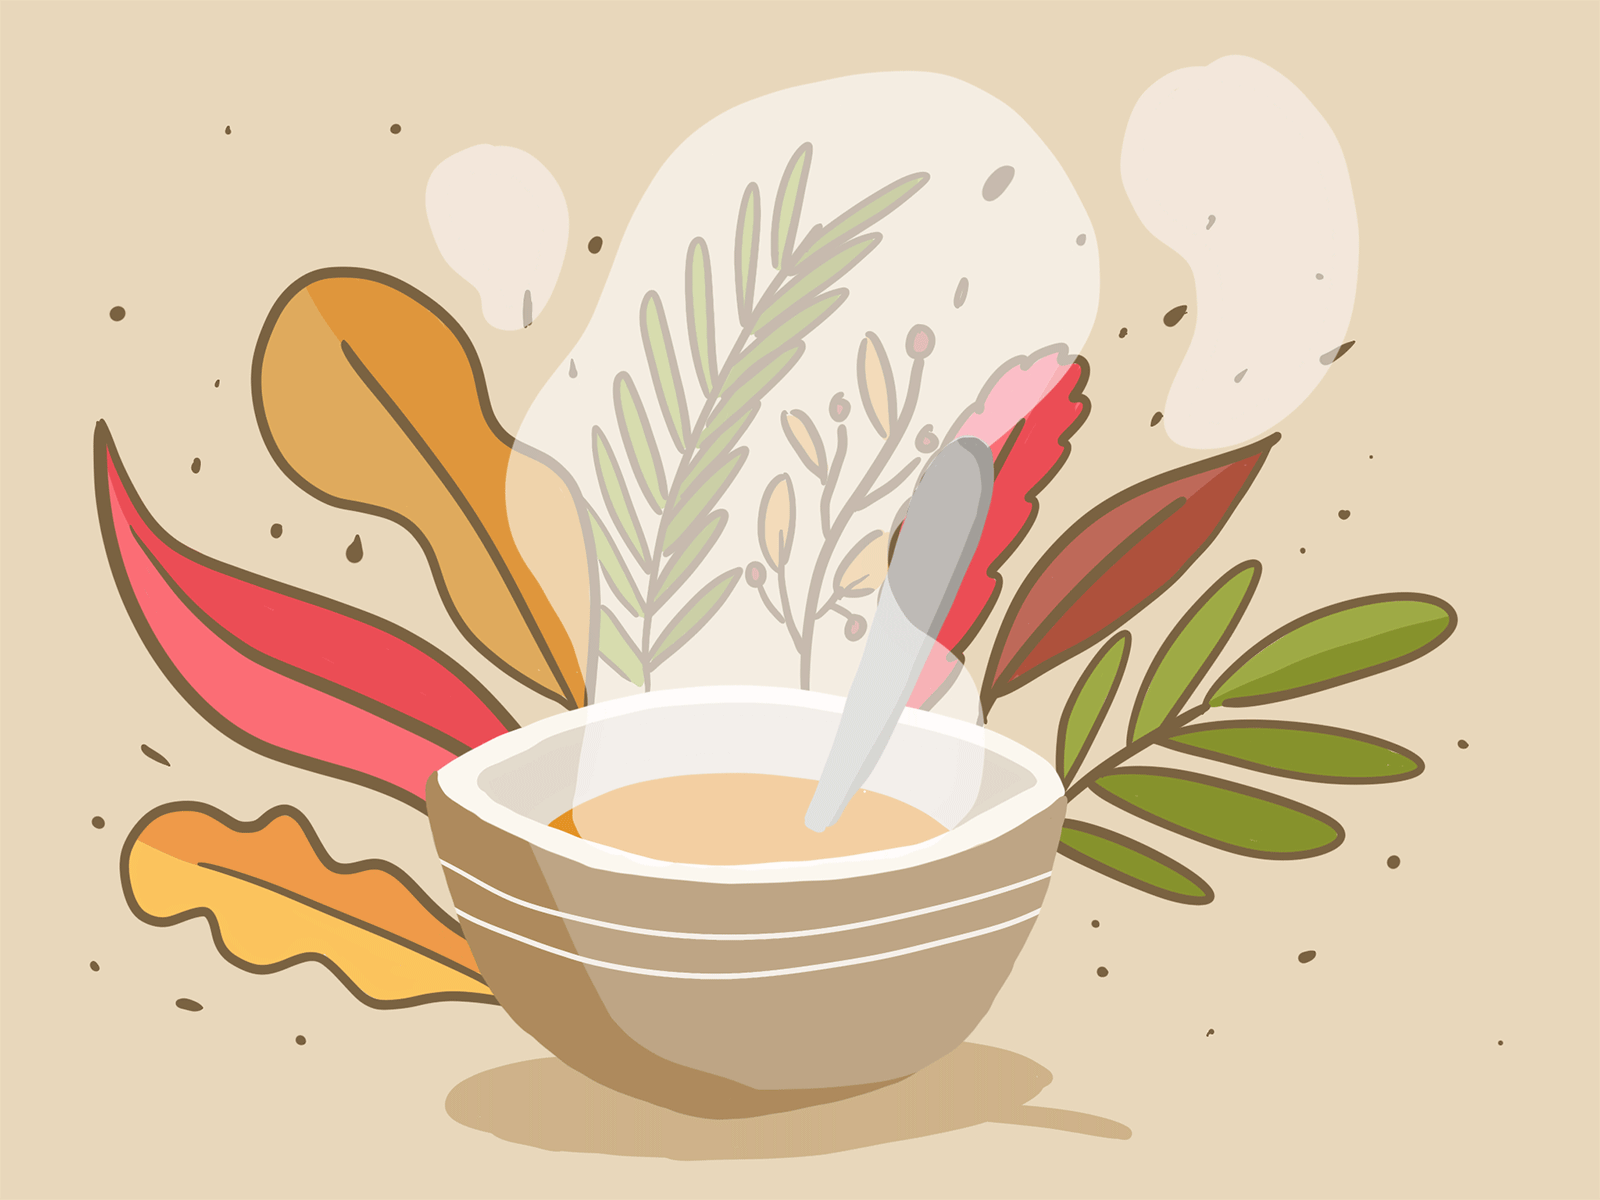 September 2019 autumn illustration music plant soup